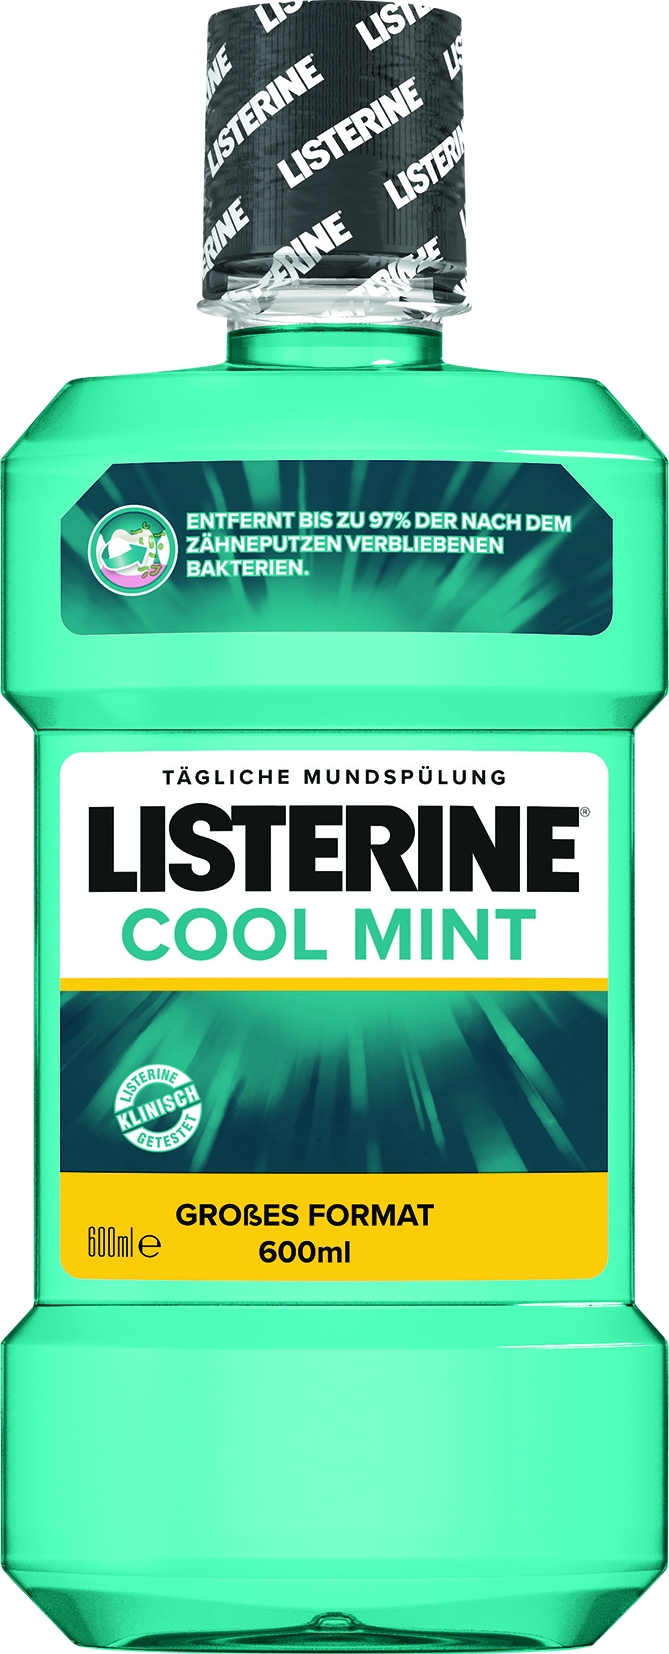 Mundspuelung Cool Mint mild